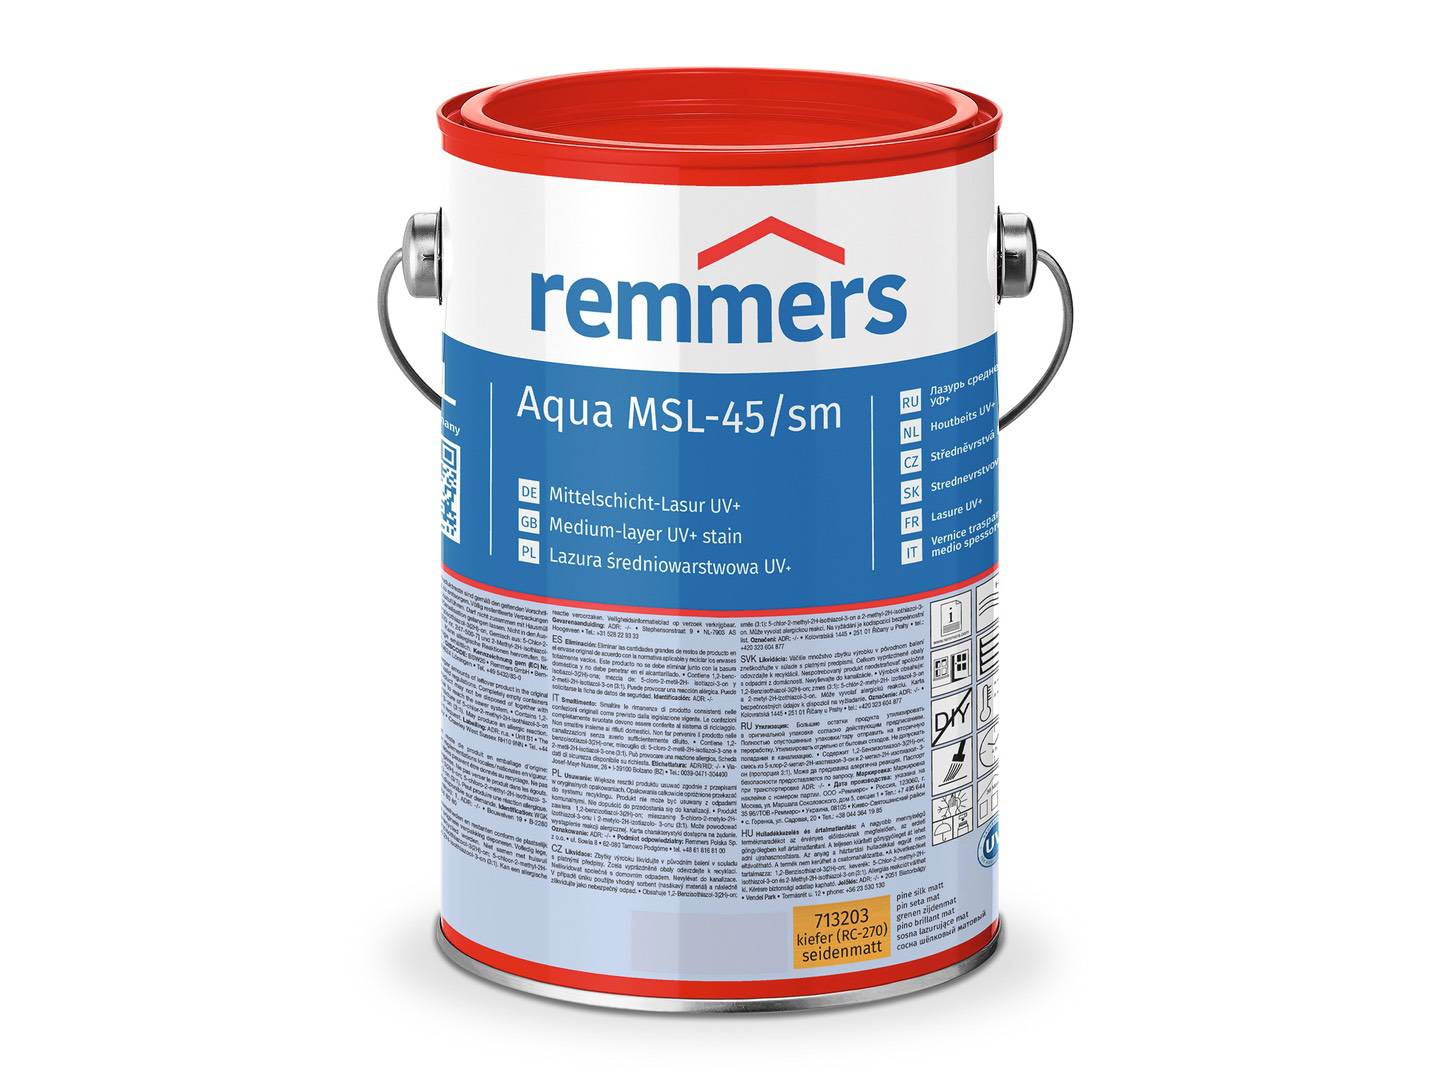 REMMERS Aqua MSL-45/sm-Mittelschicht-Lasur UV+ pinie/lärche (RC-260) 2,50 l